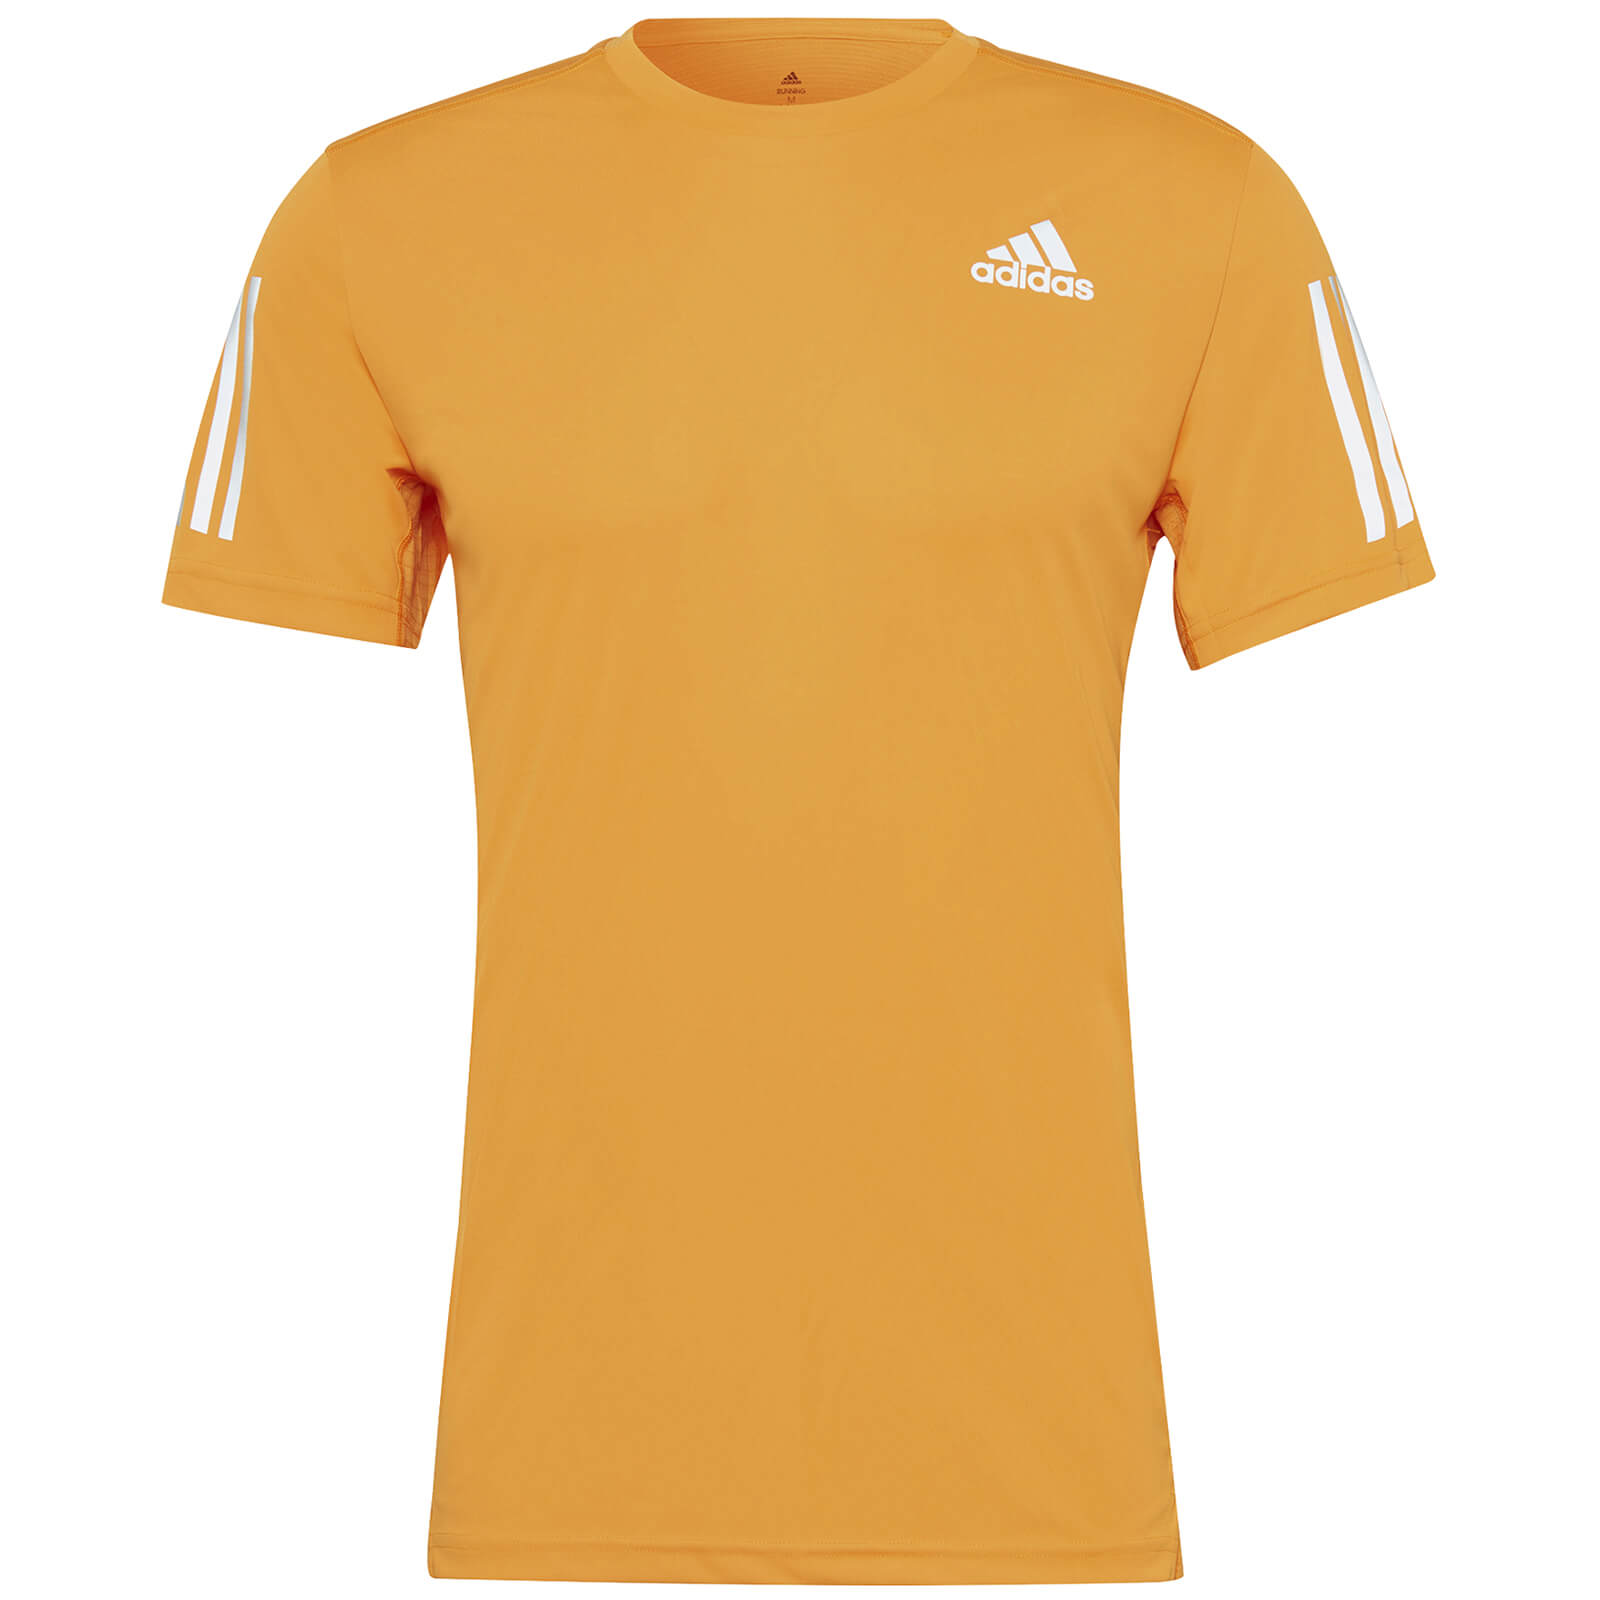 Adidas Own The Run T-Shirt - Orange Rush/Reflective Silver - L